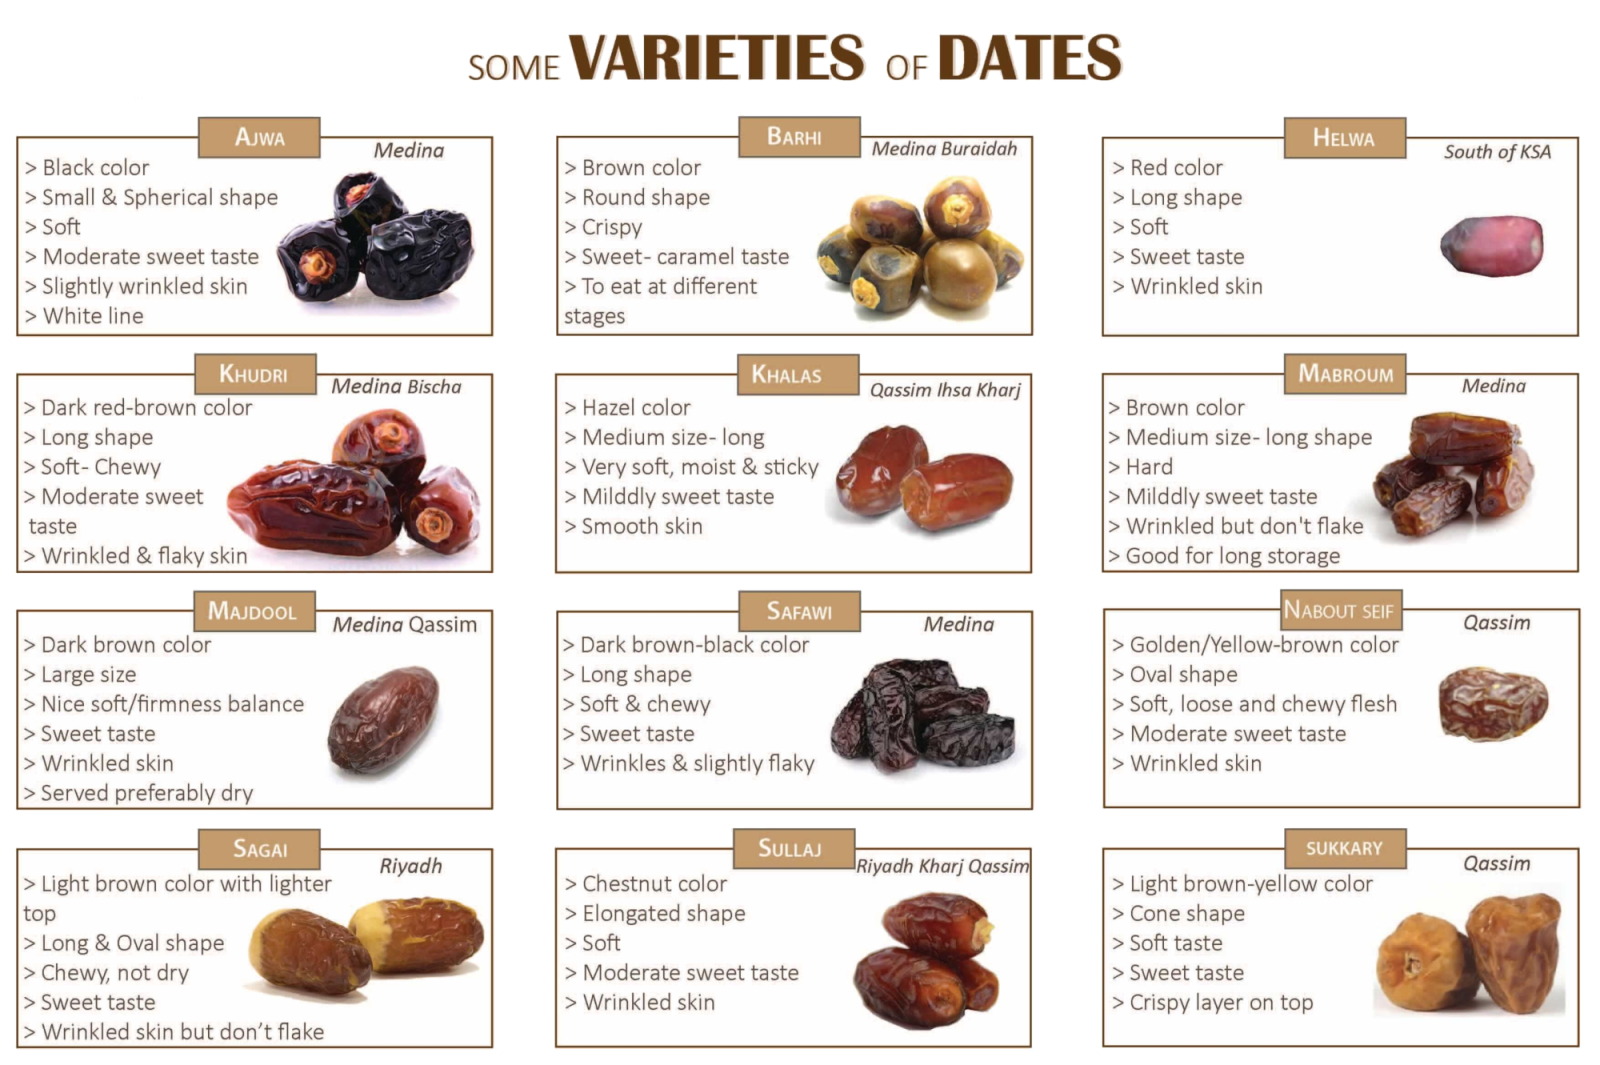 Some Varieties of Dates